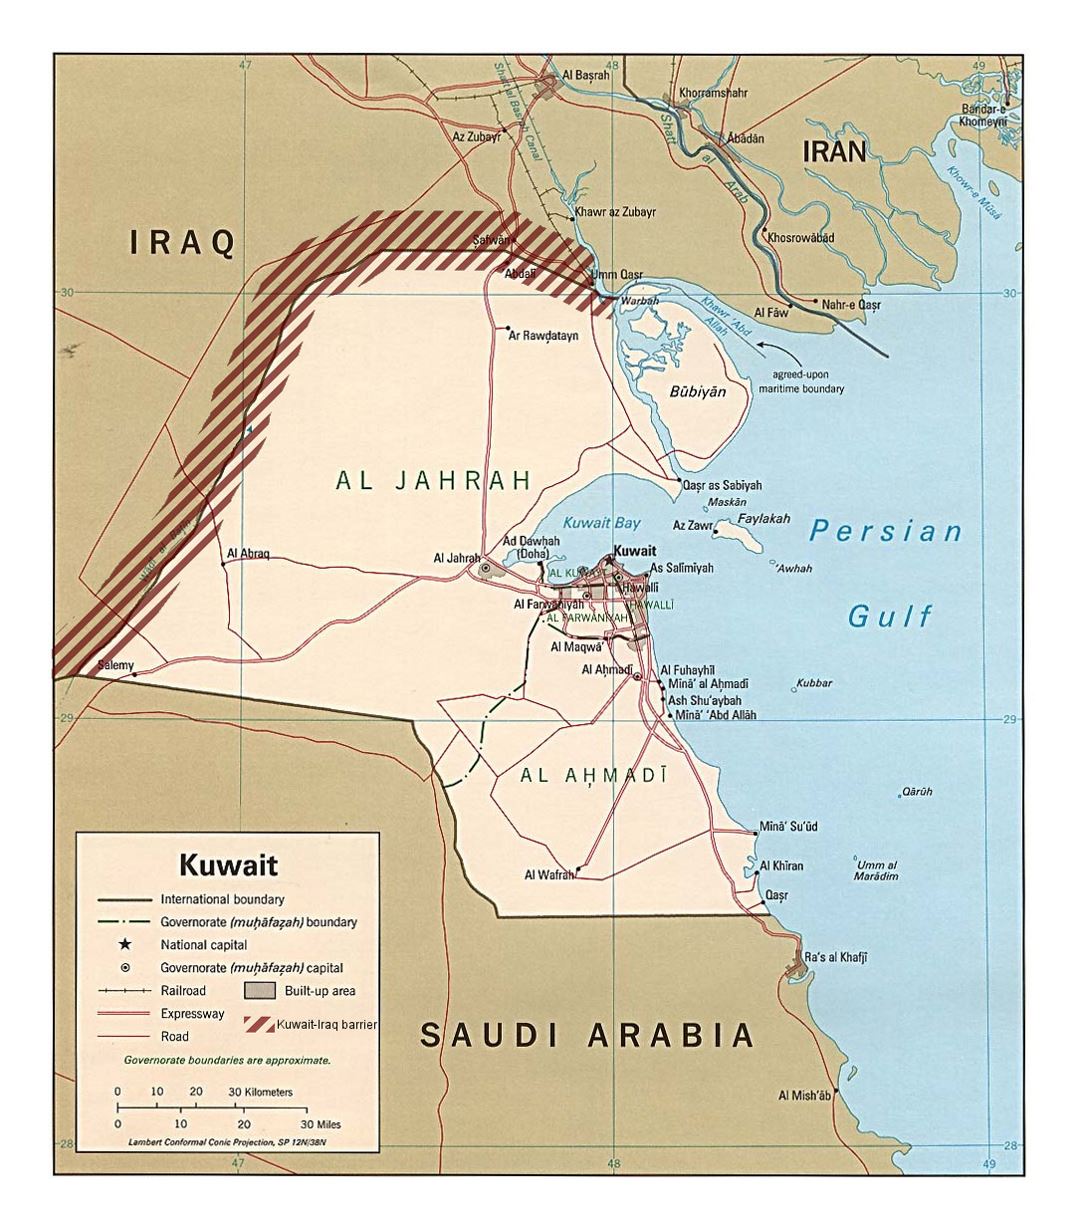 Detallado mapa político de Kuwait con barrera Kuwait-Iraq